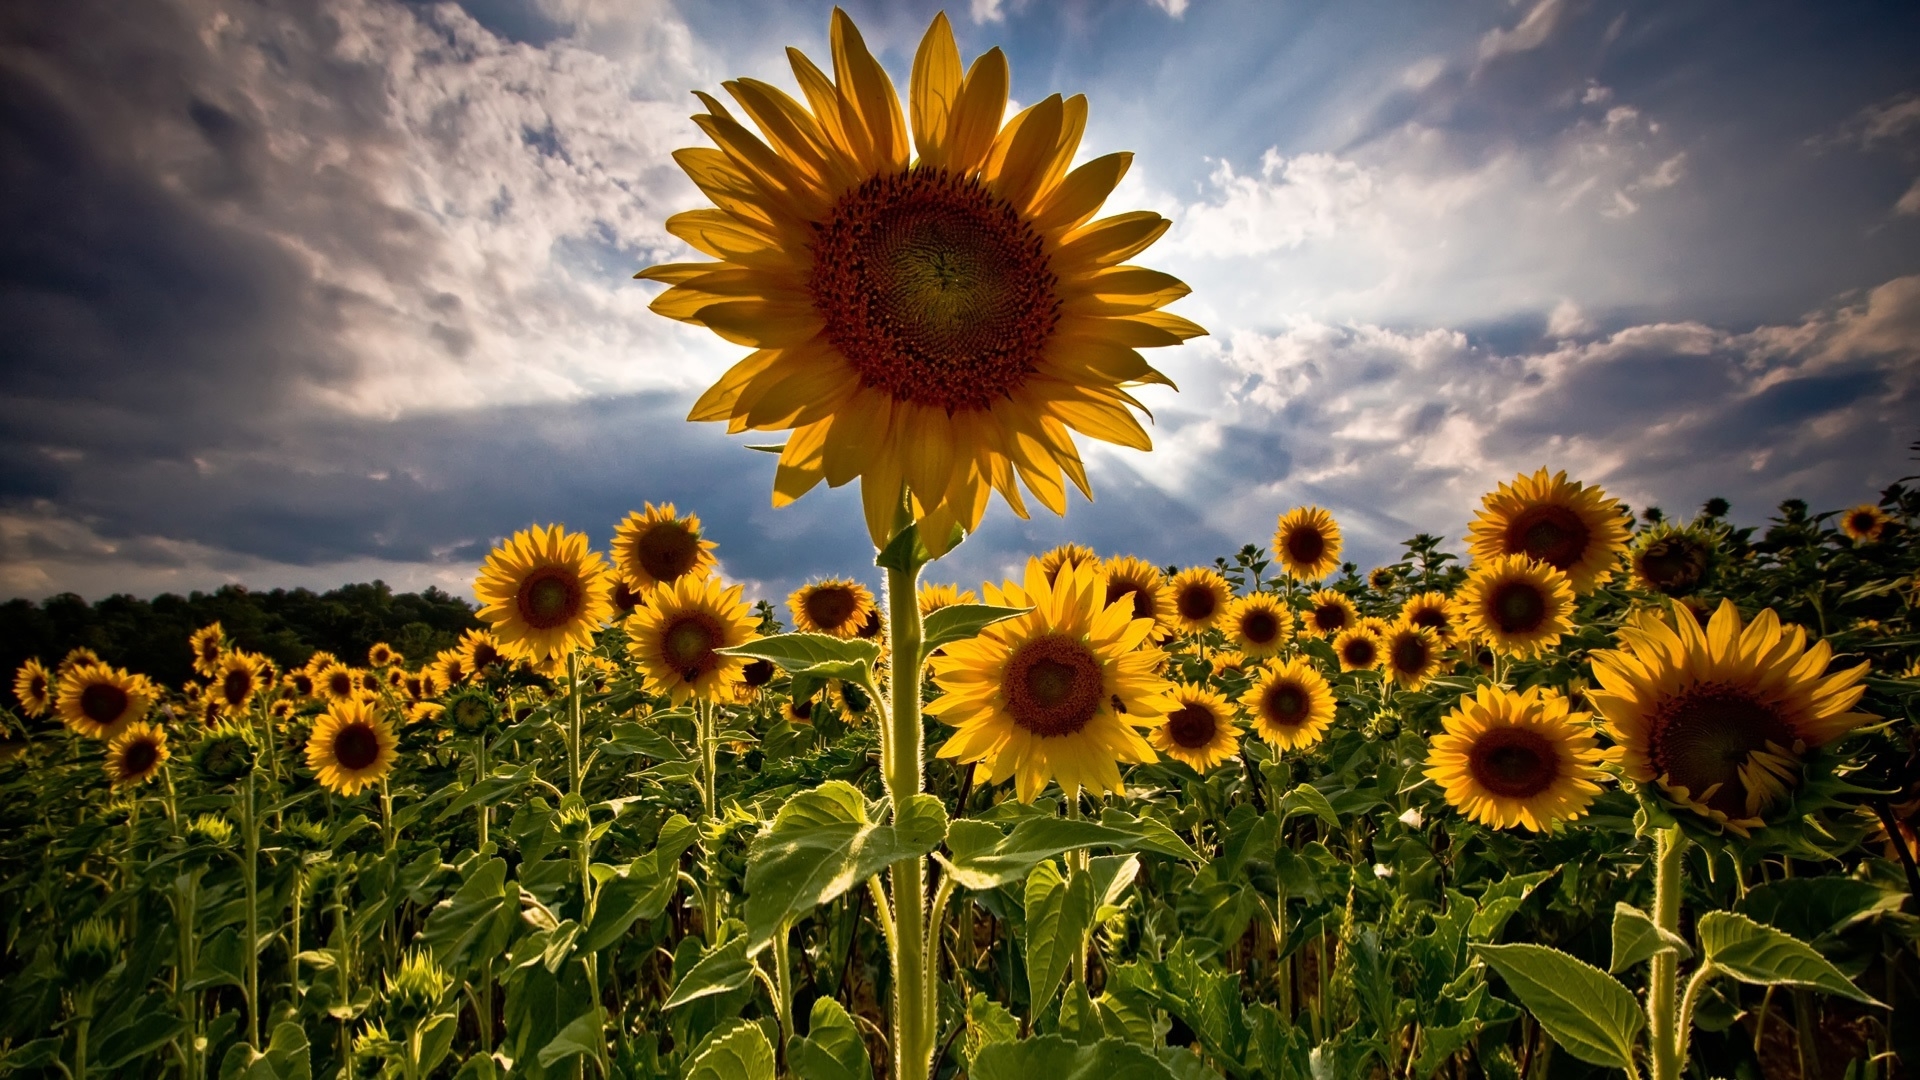 Amazing Sunflowers for 1920 x 1080 HDTV 1080p resolution